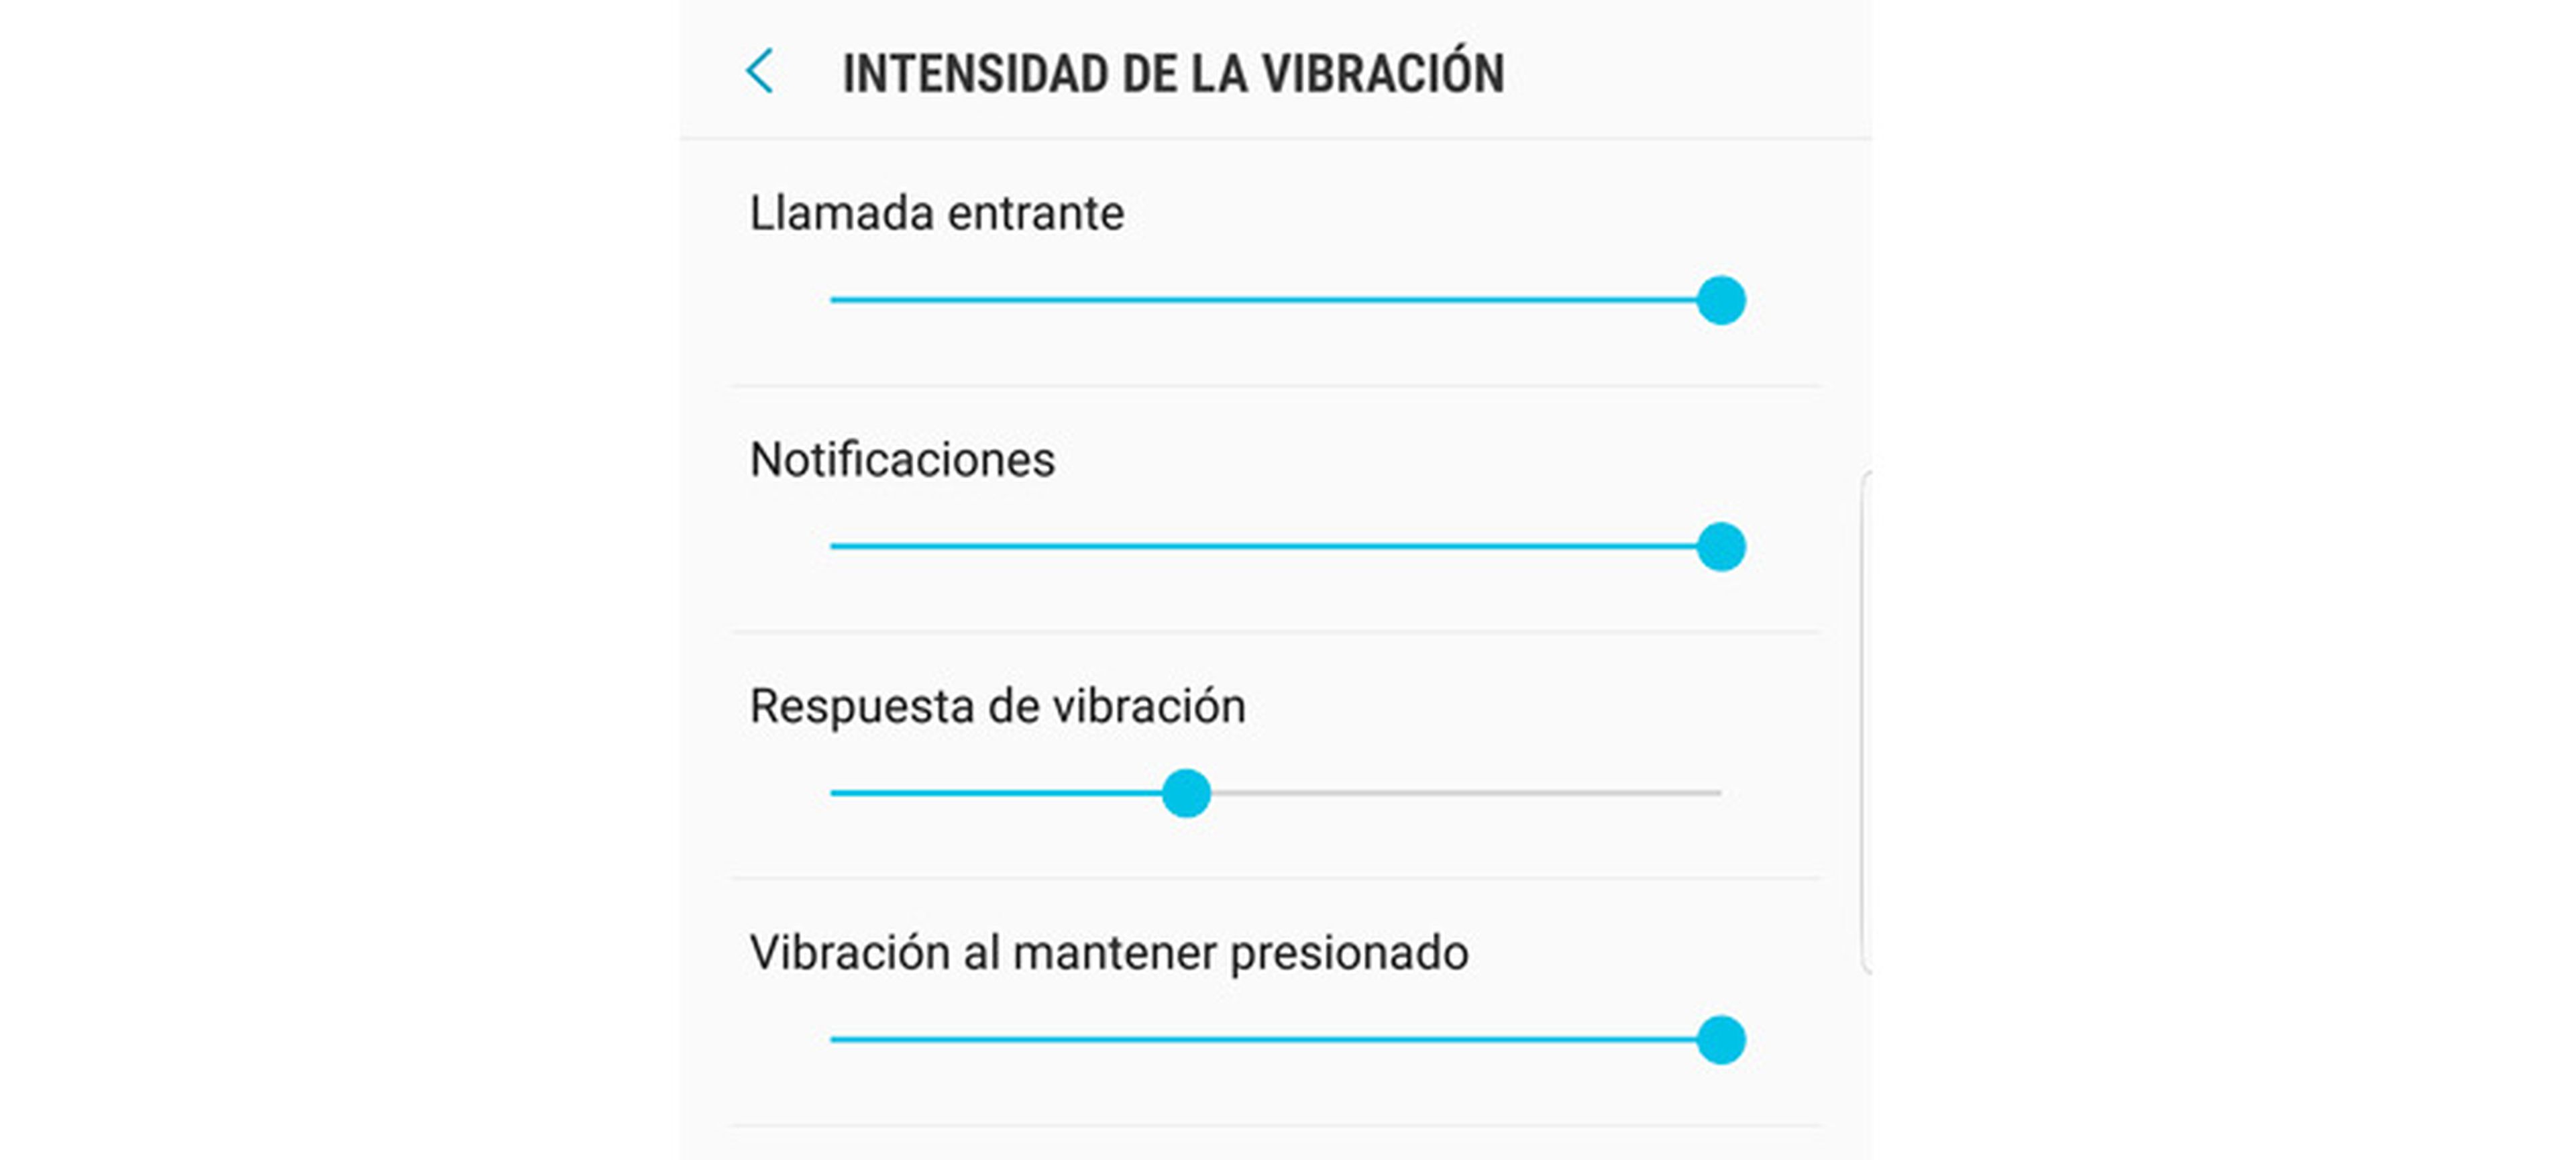 Intensidad Vibracion S9